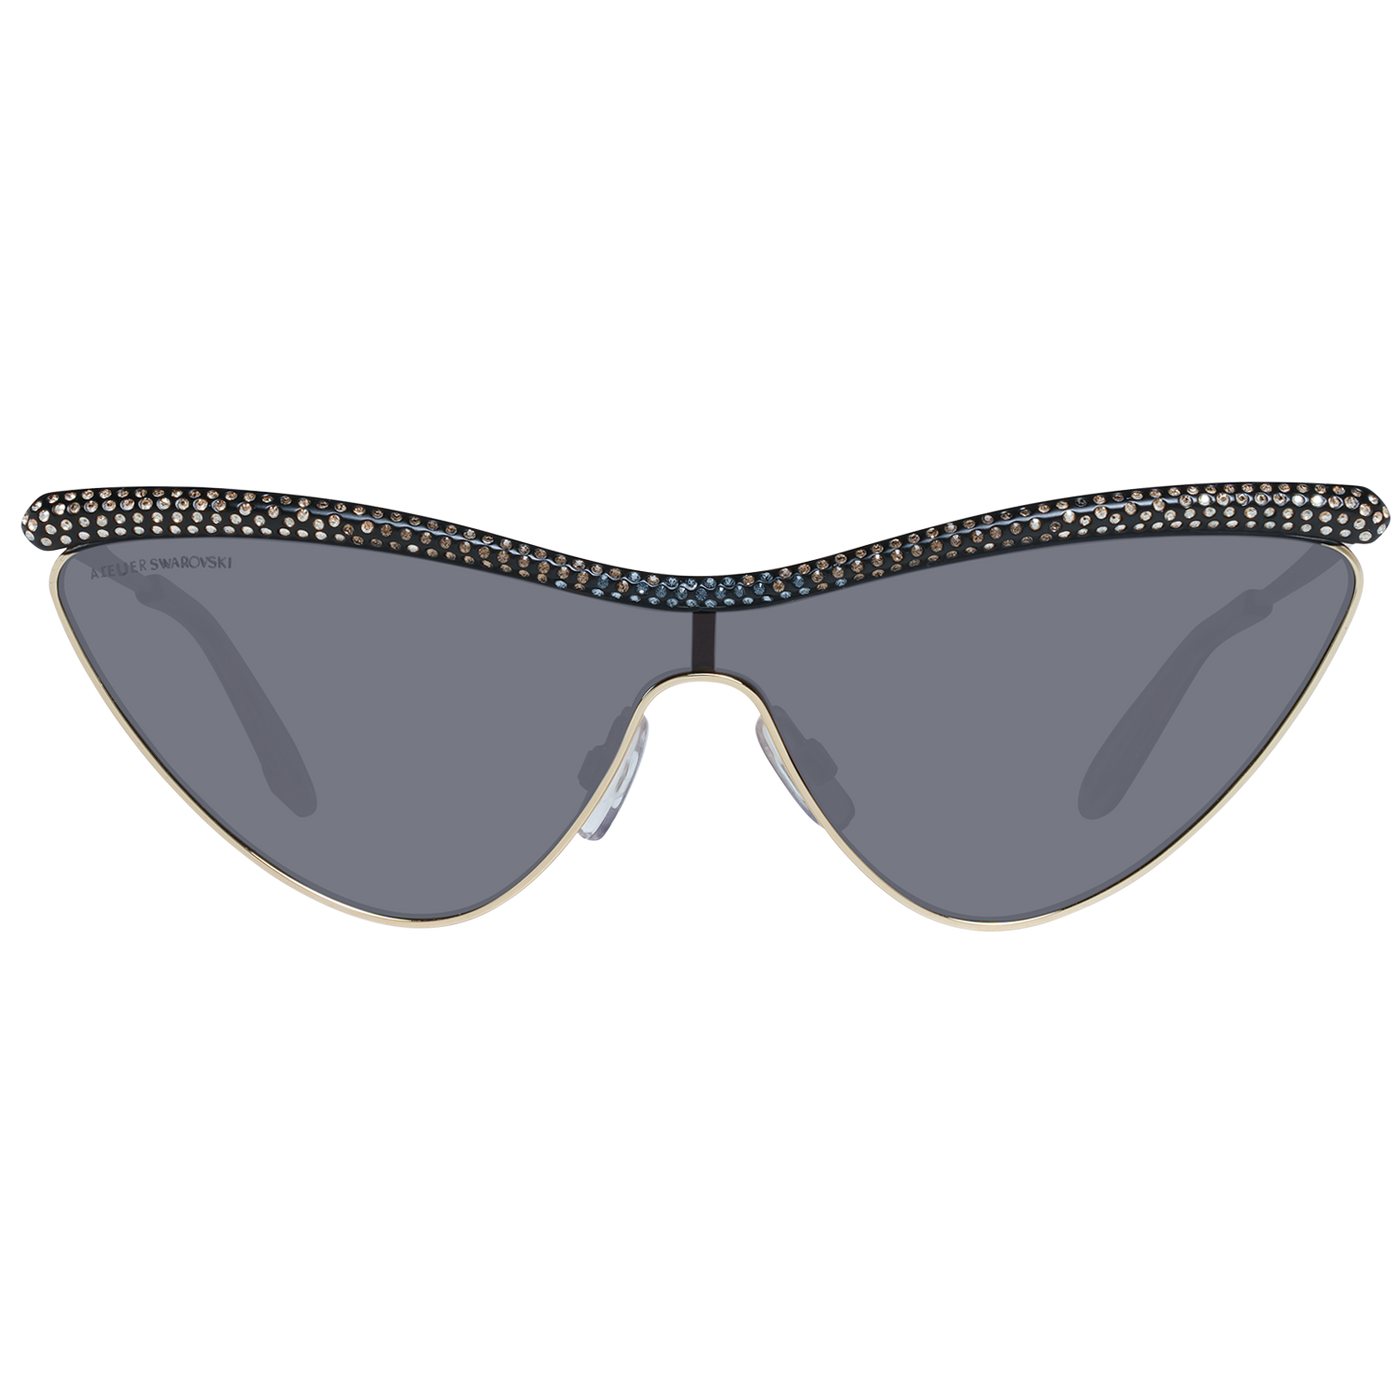 Atelier Swarovski Gold Women Sunglasses